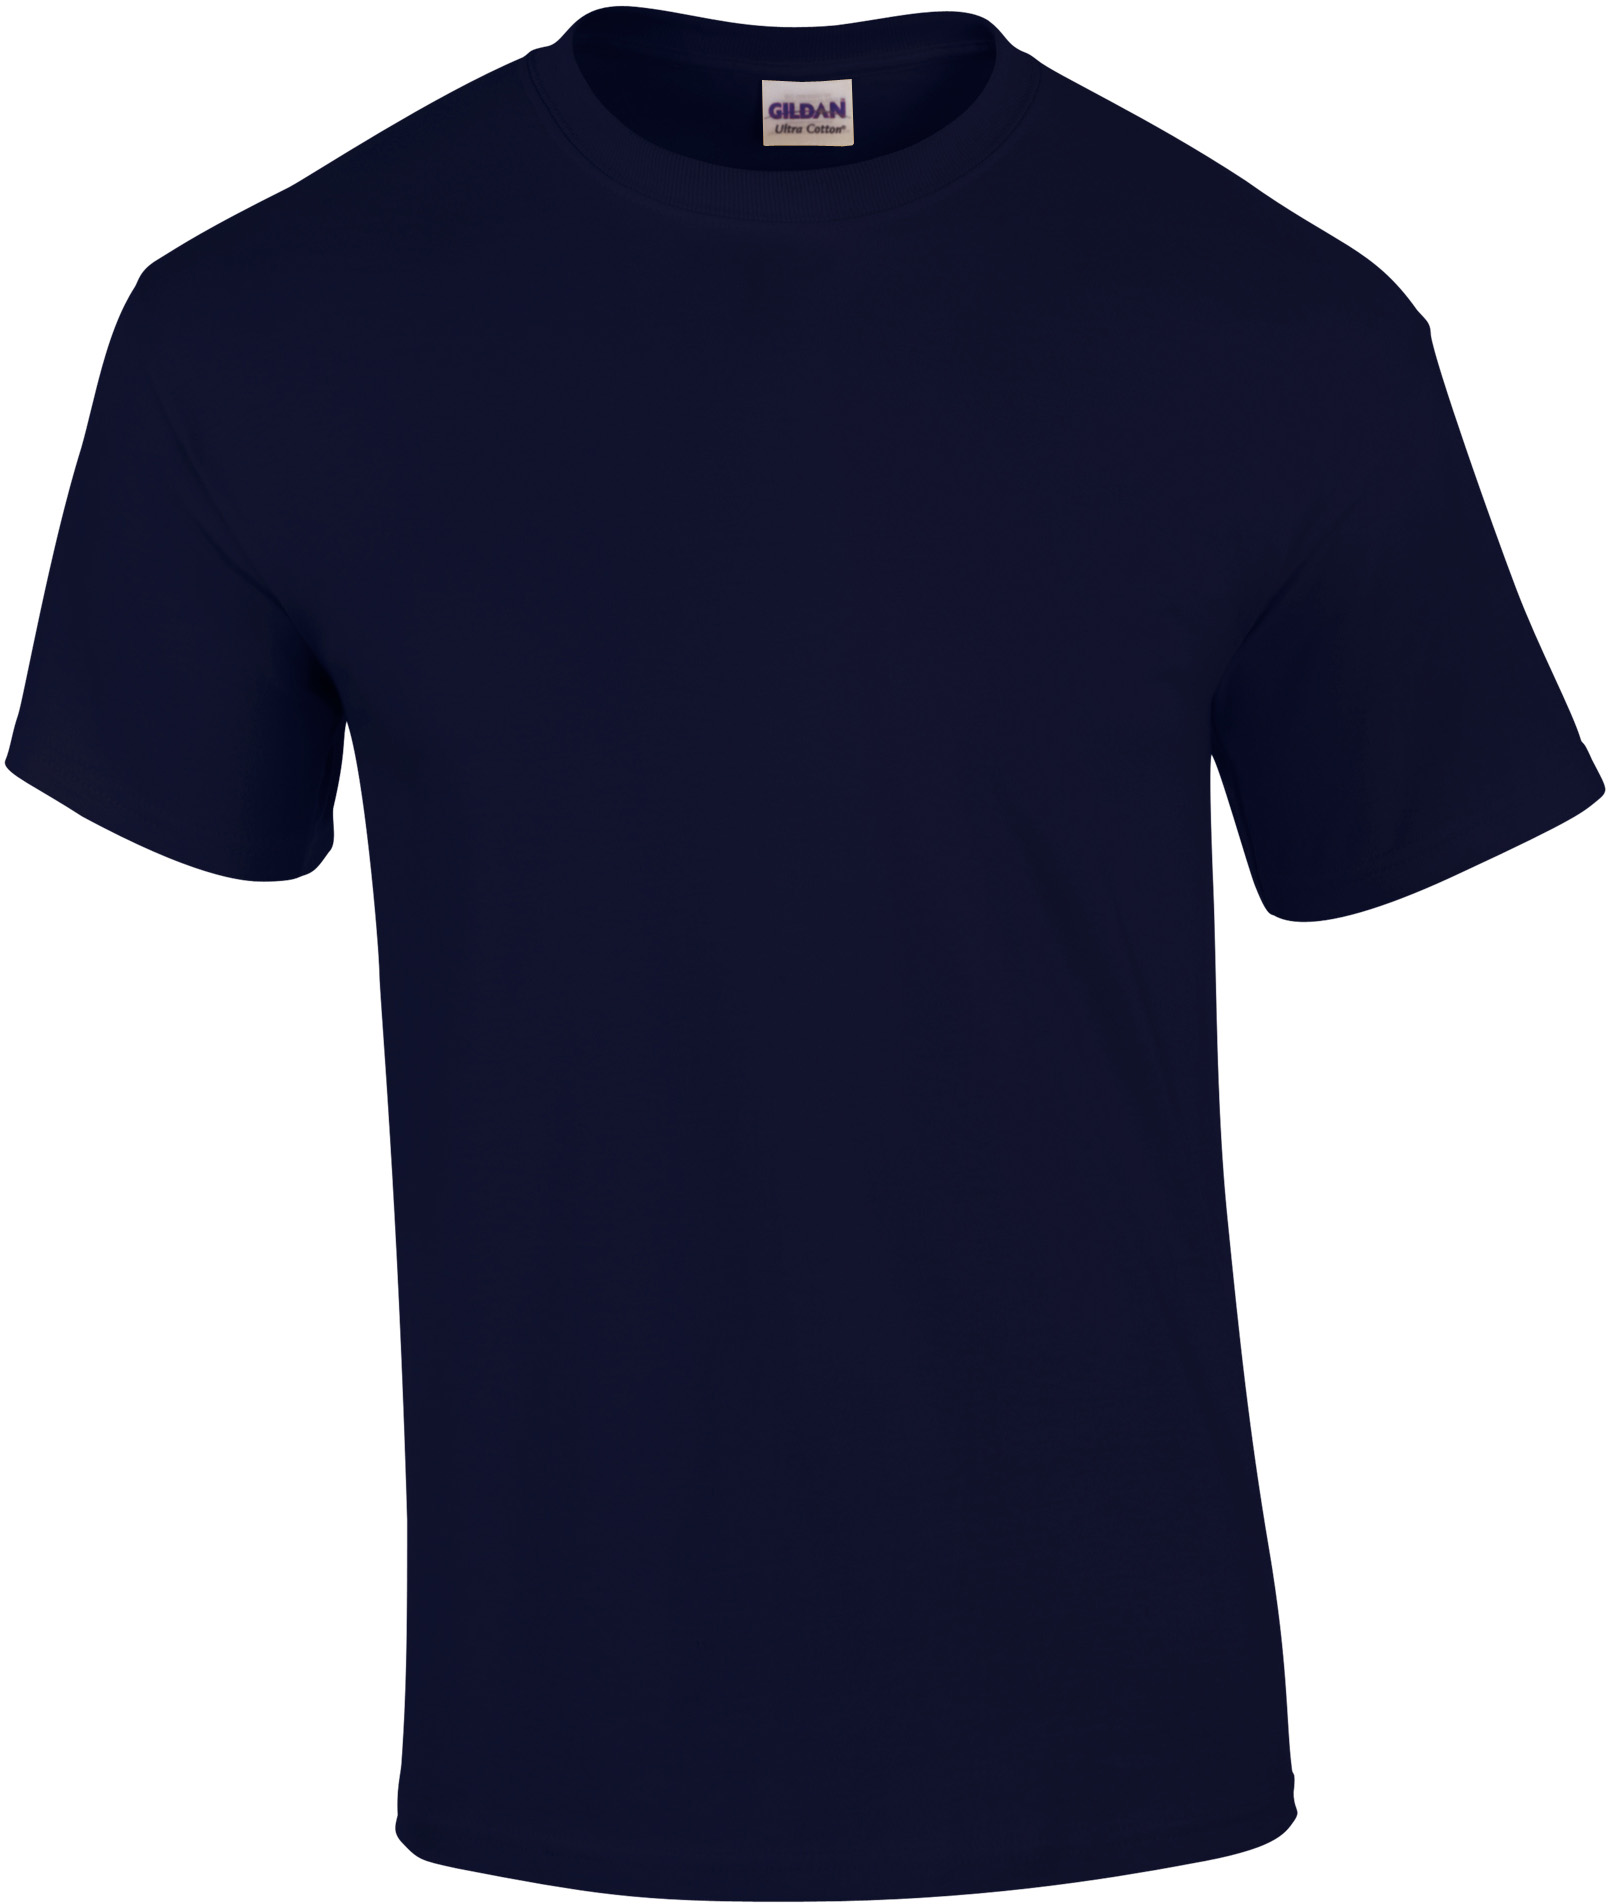 Tričko Gildan Ultra - Námořní modrá 4XL